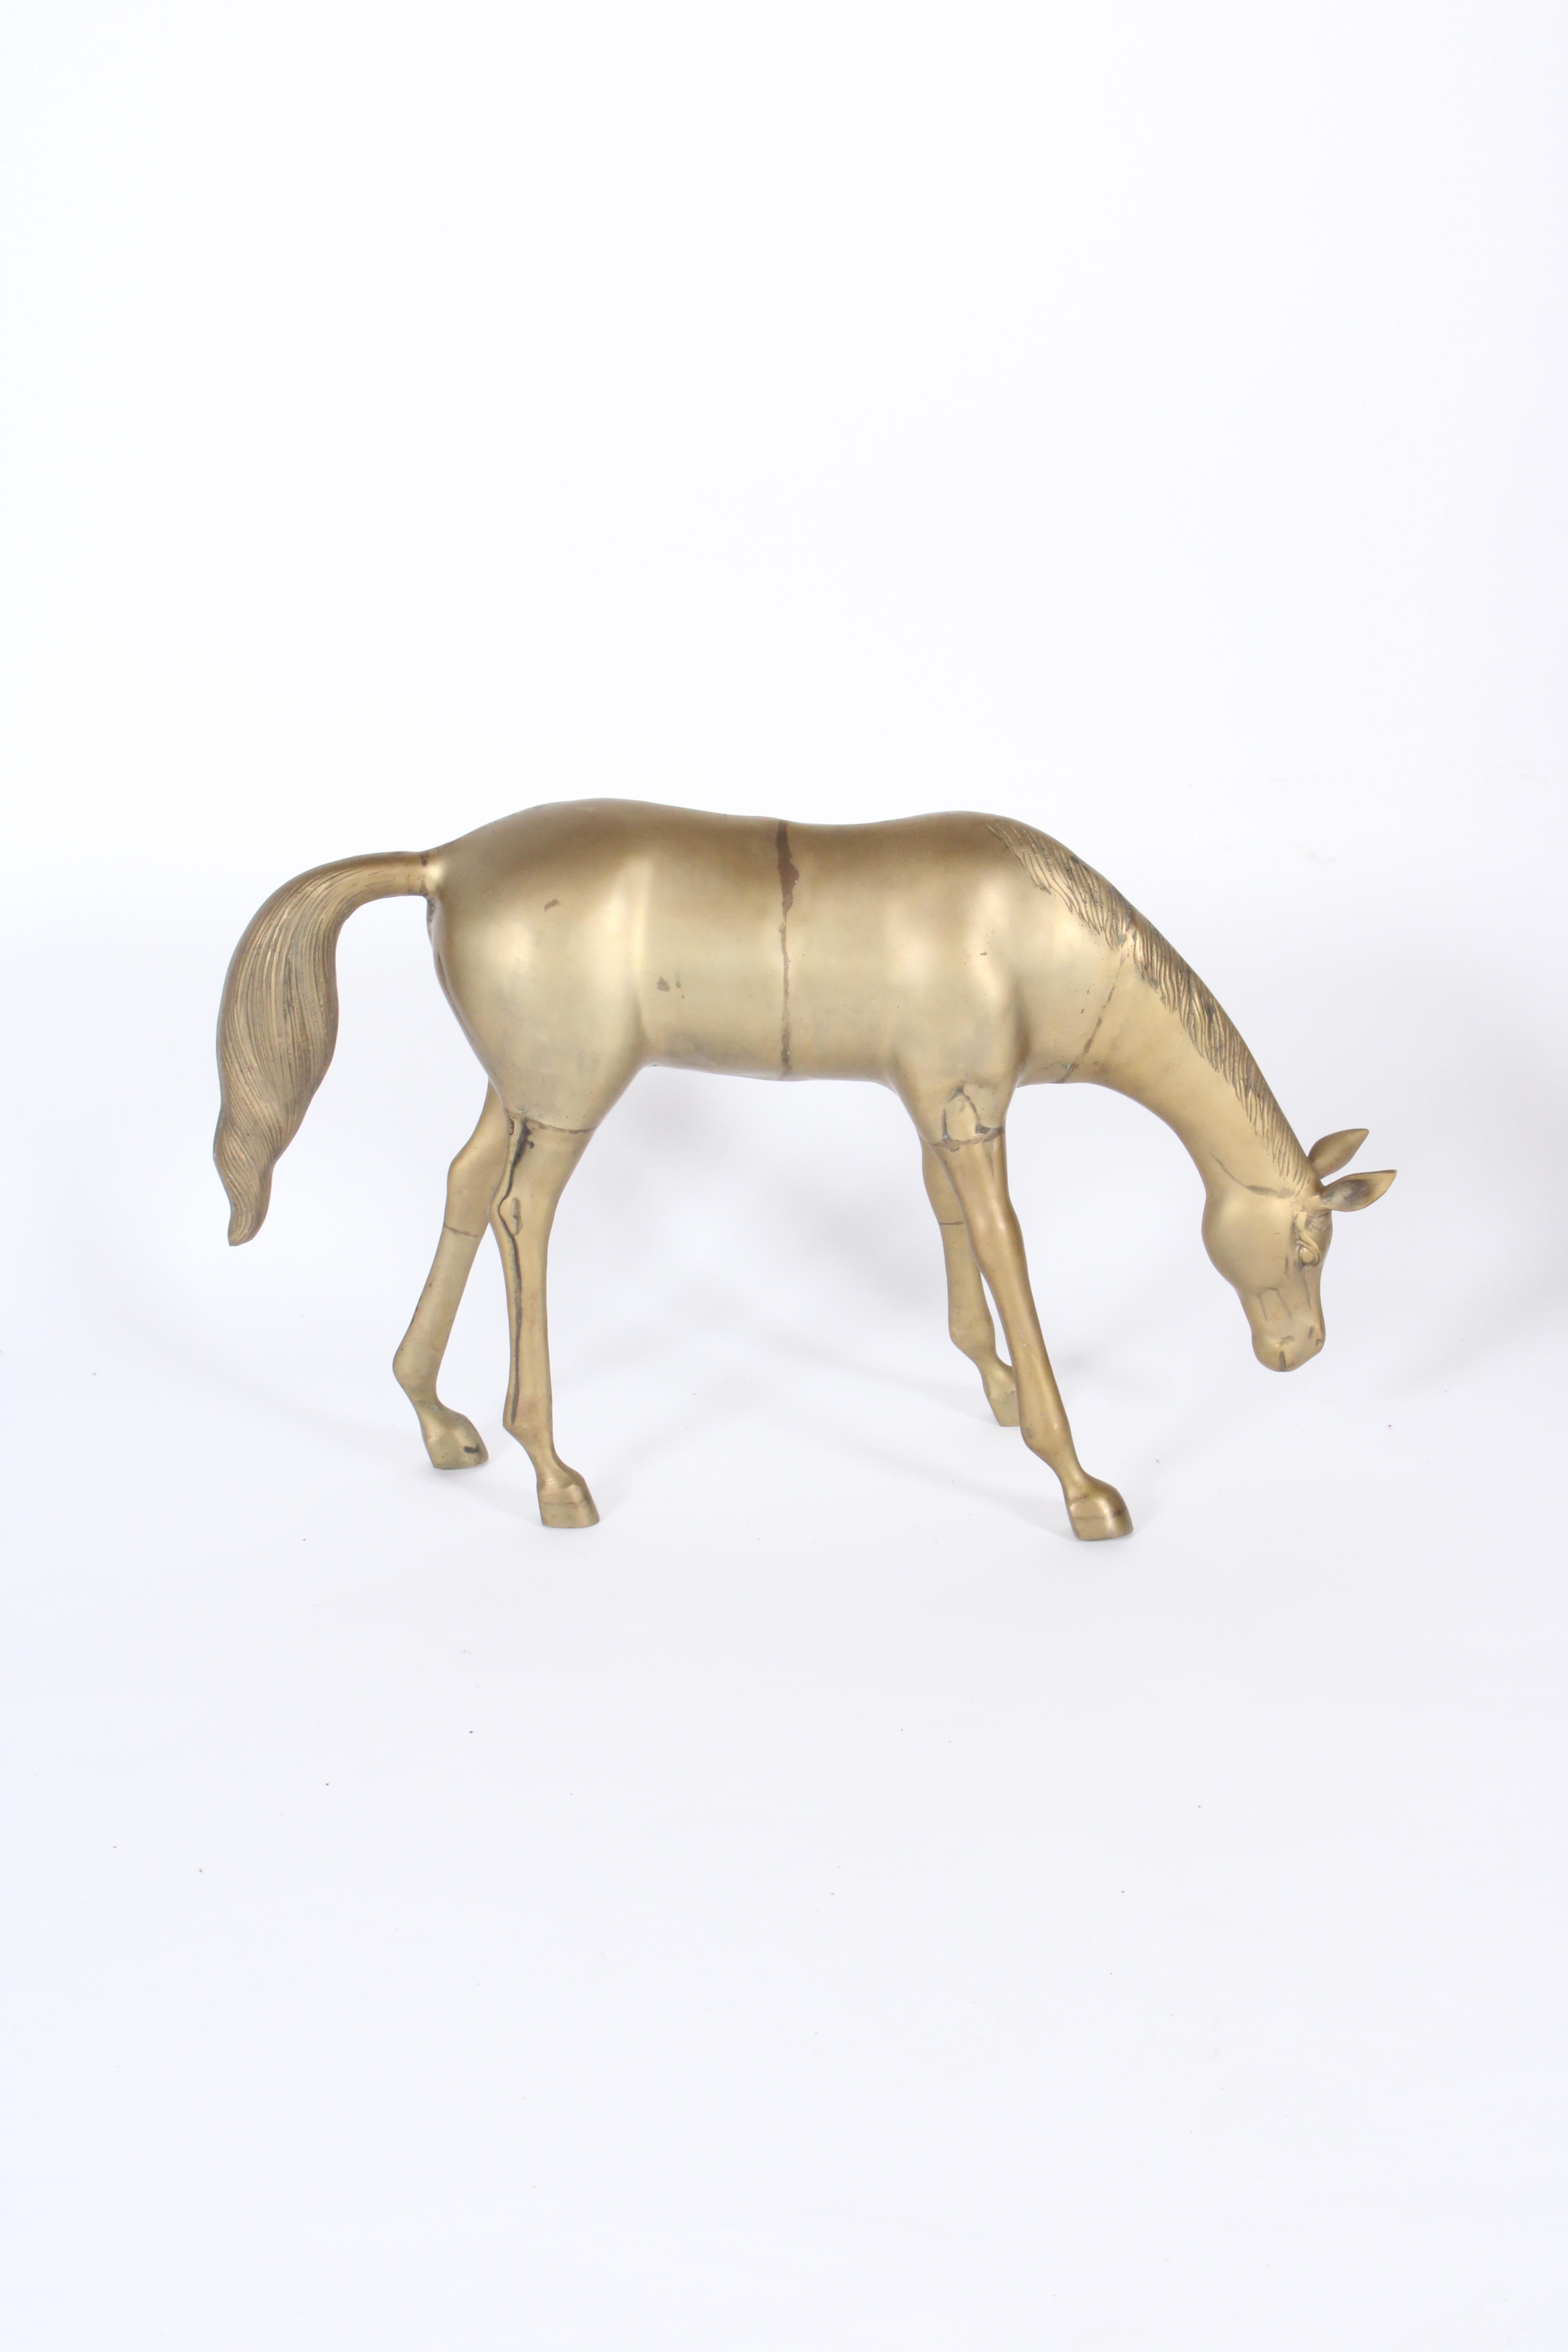 Cast Stunning Vintage Artisan Decorative Brass Horse Sculpture  For Sale